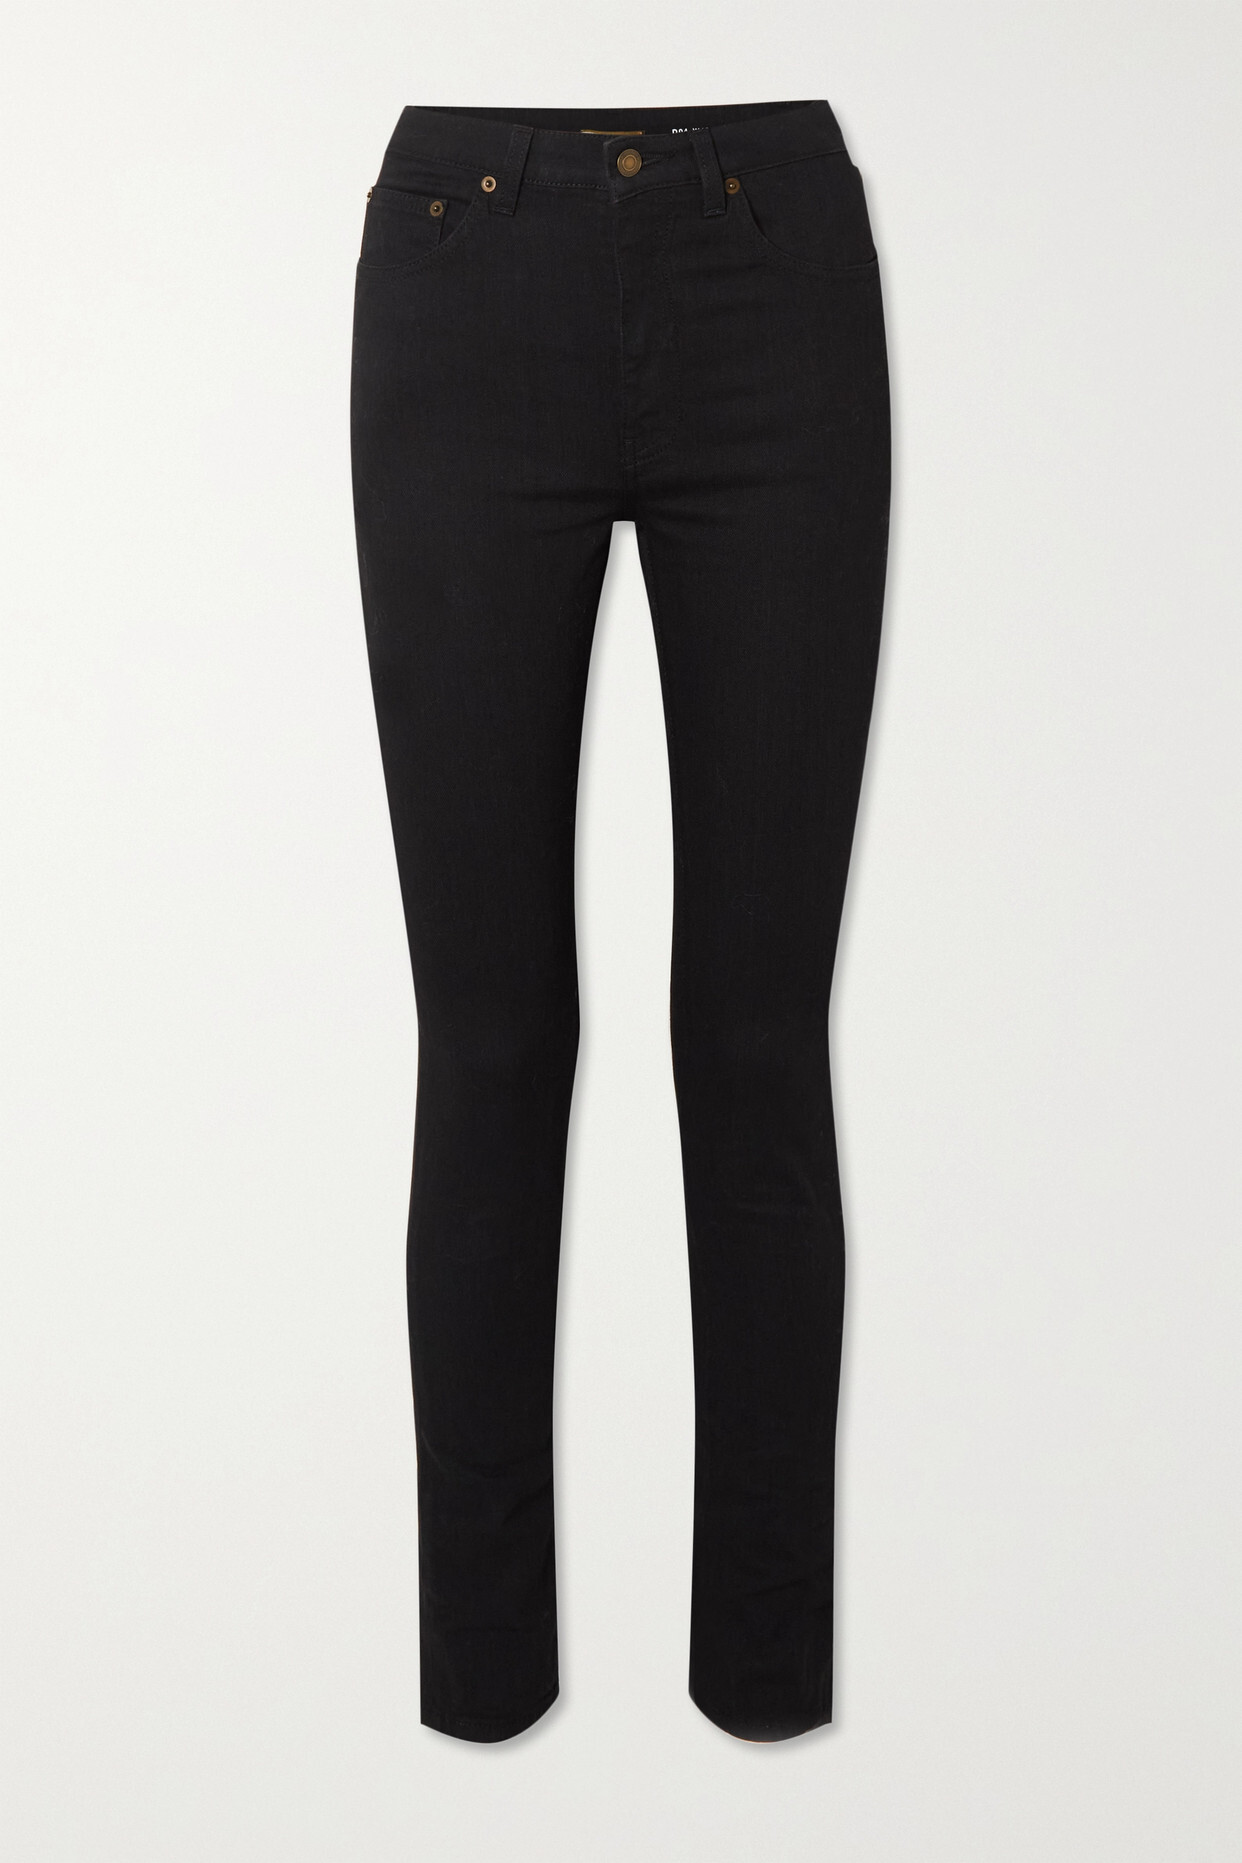 SAINT LAURENT - High-rise Skinny Jeans - Black